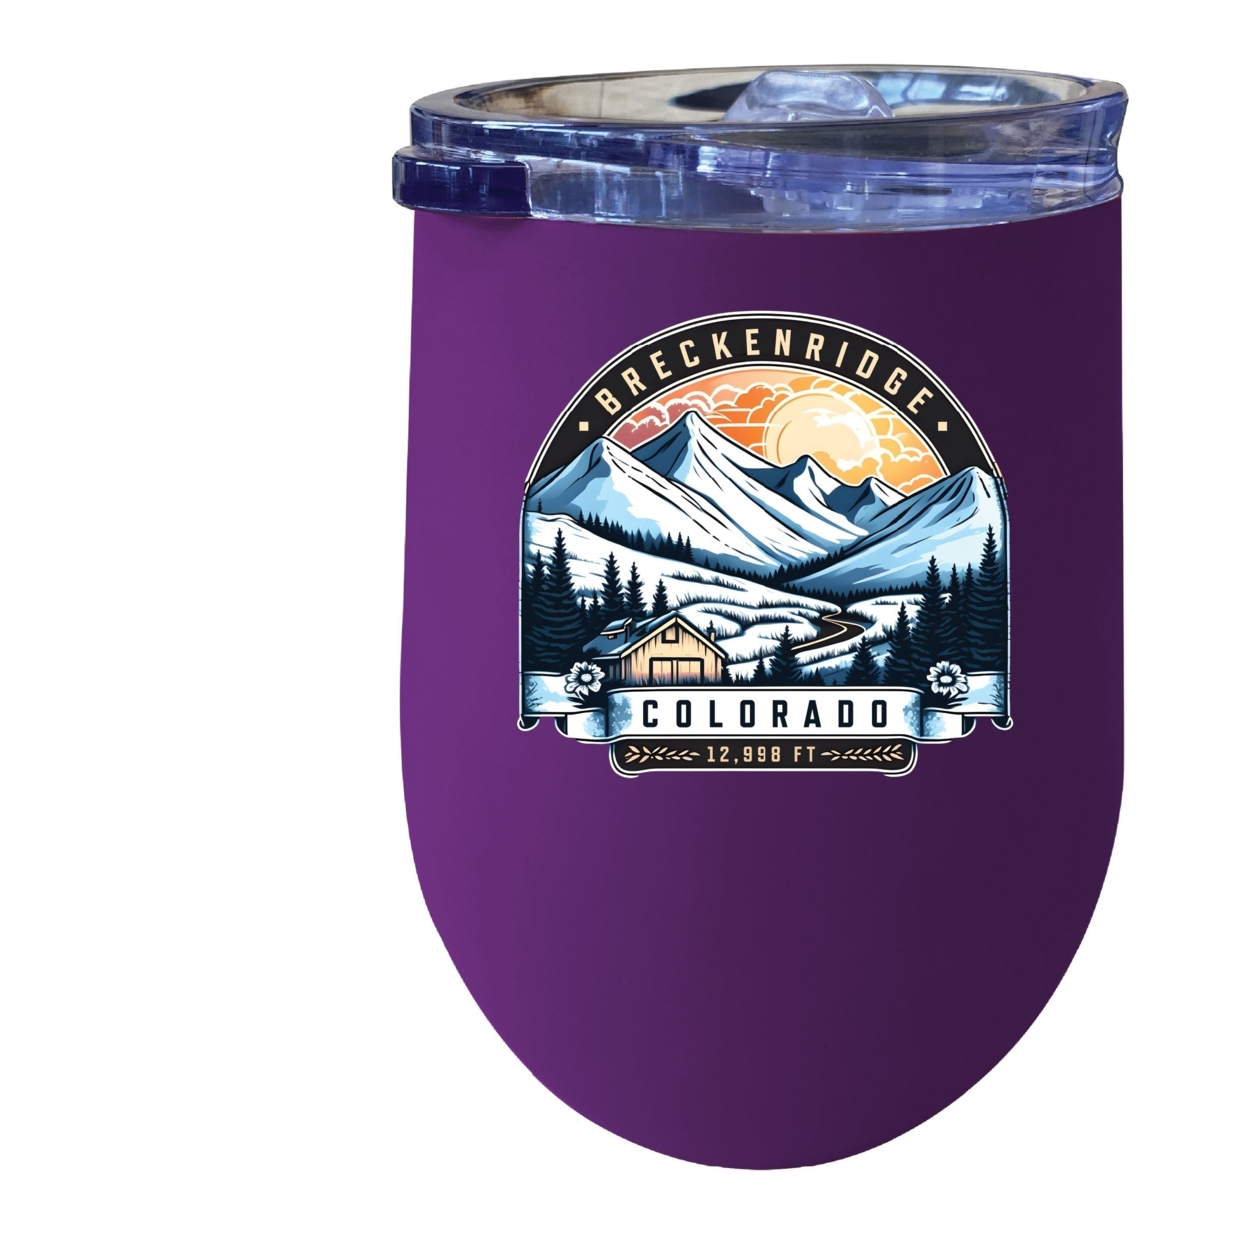 Breckenridge Colorado Souvenir 12 Oz Insulated Wine Stainless Steel Tumbler - Purple